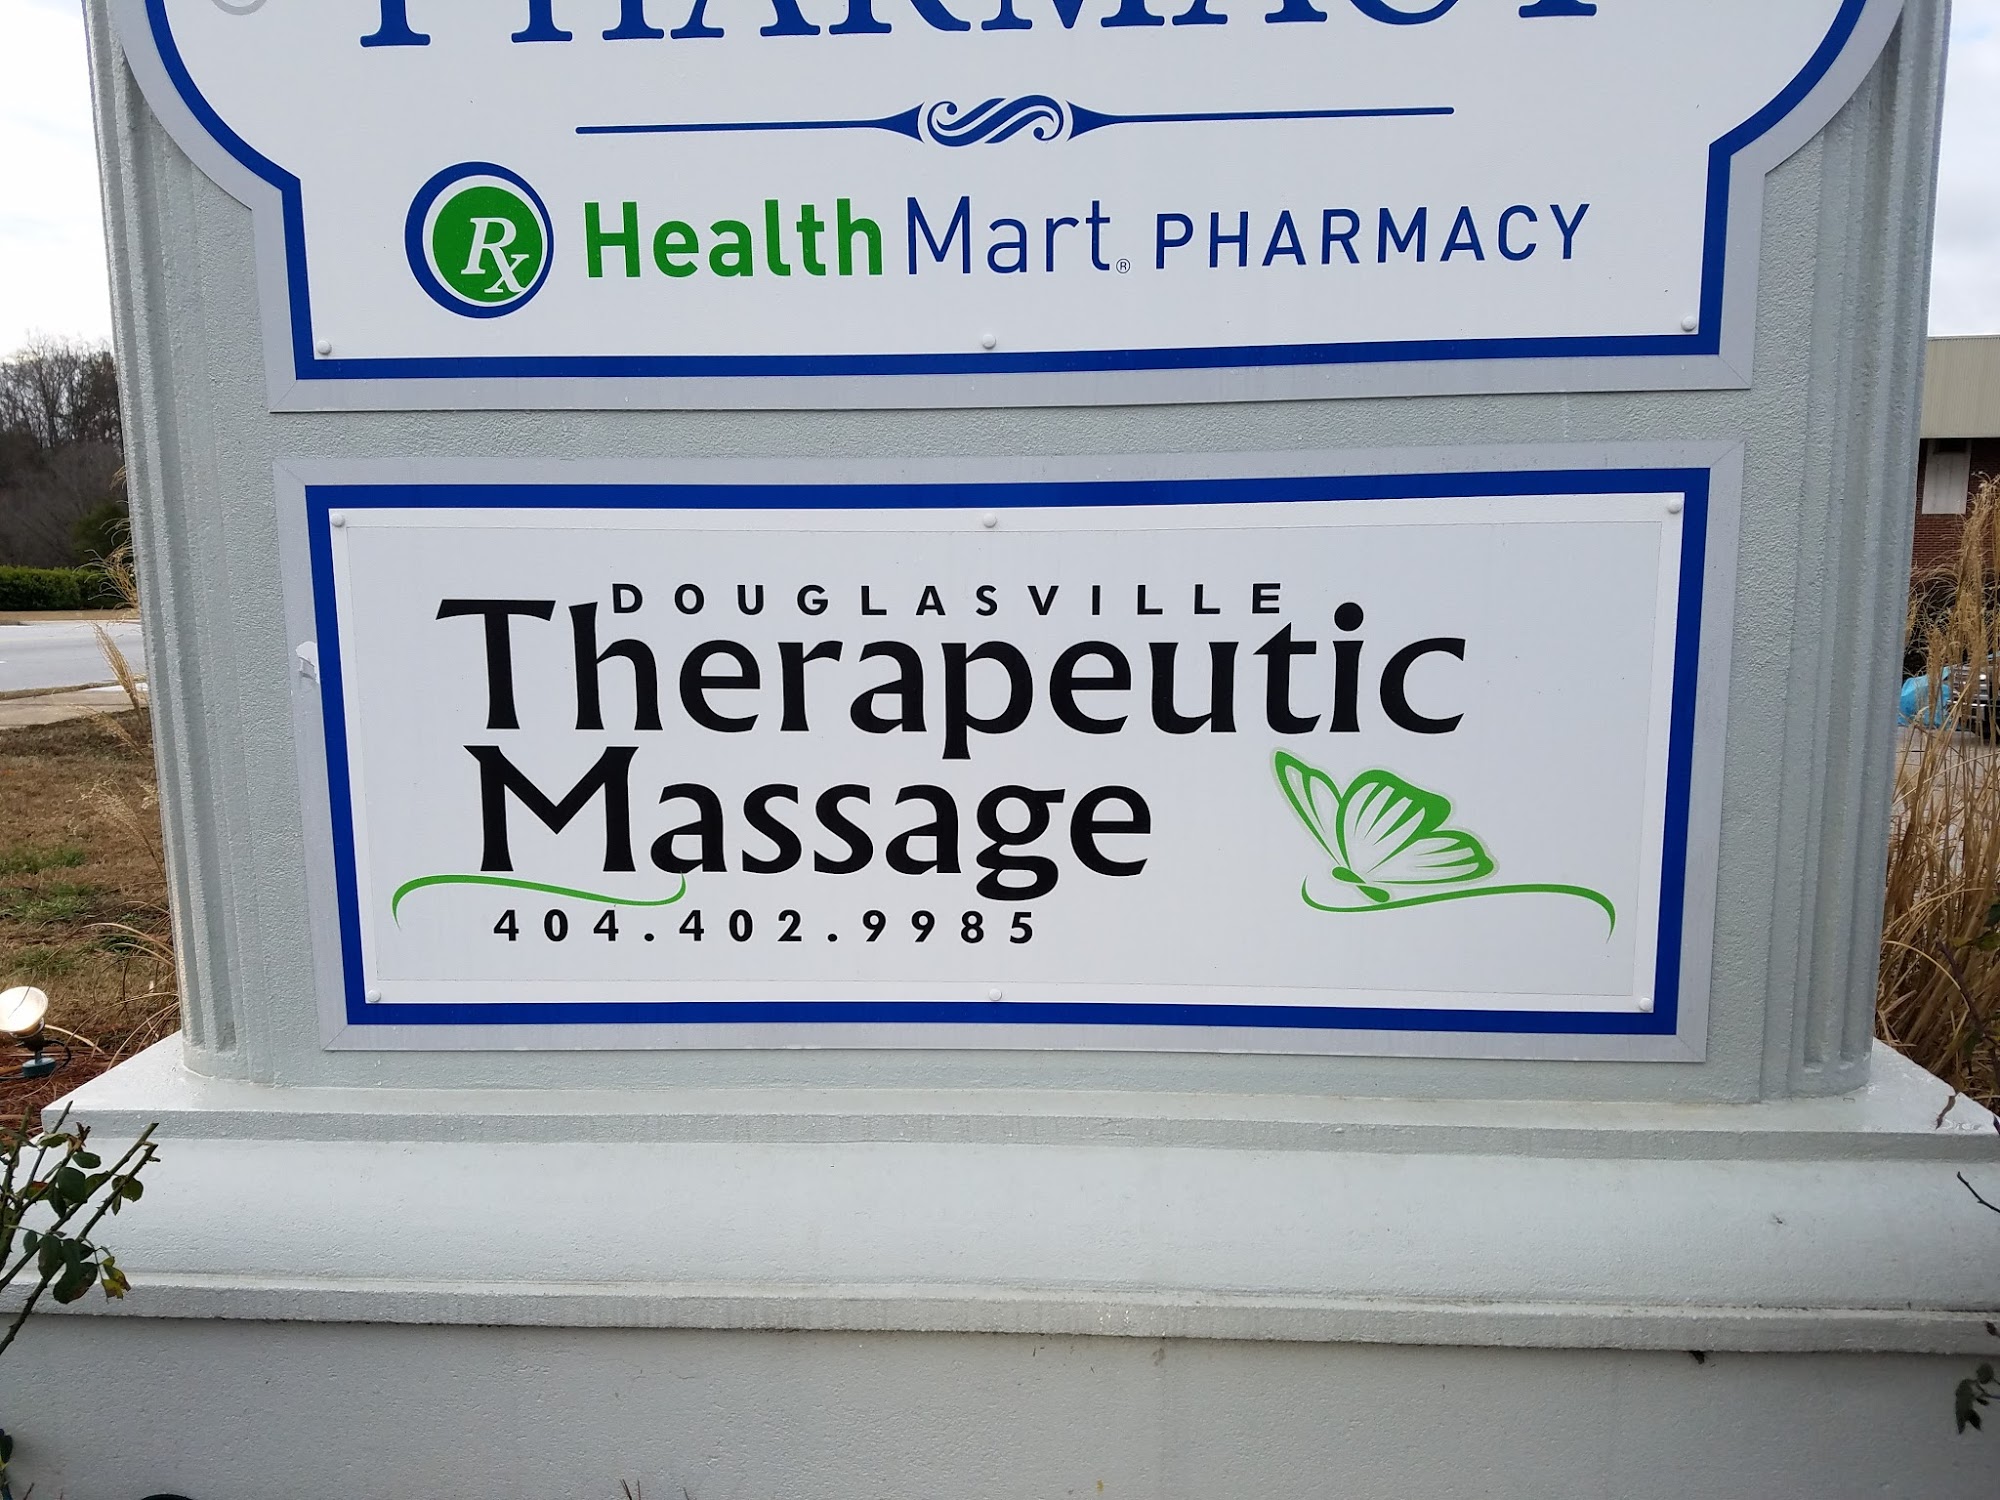 Douglasville Therapeutic Massage